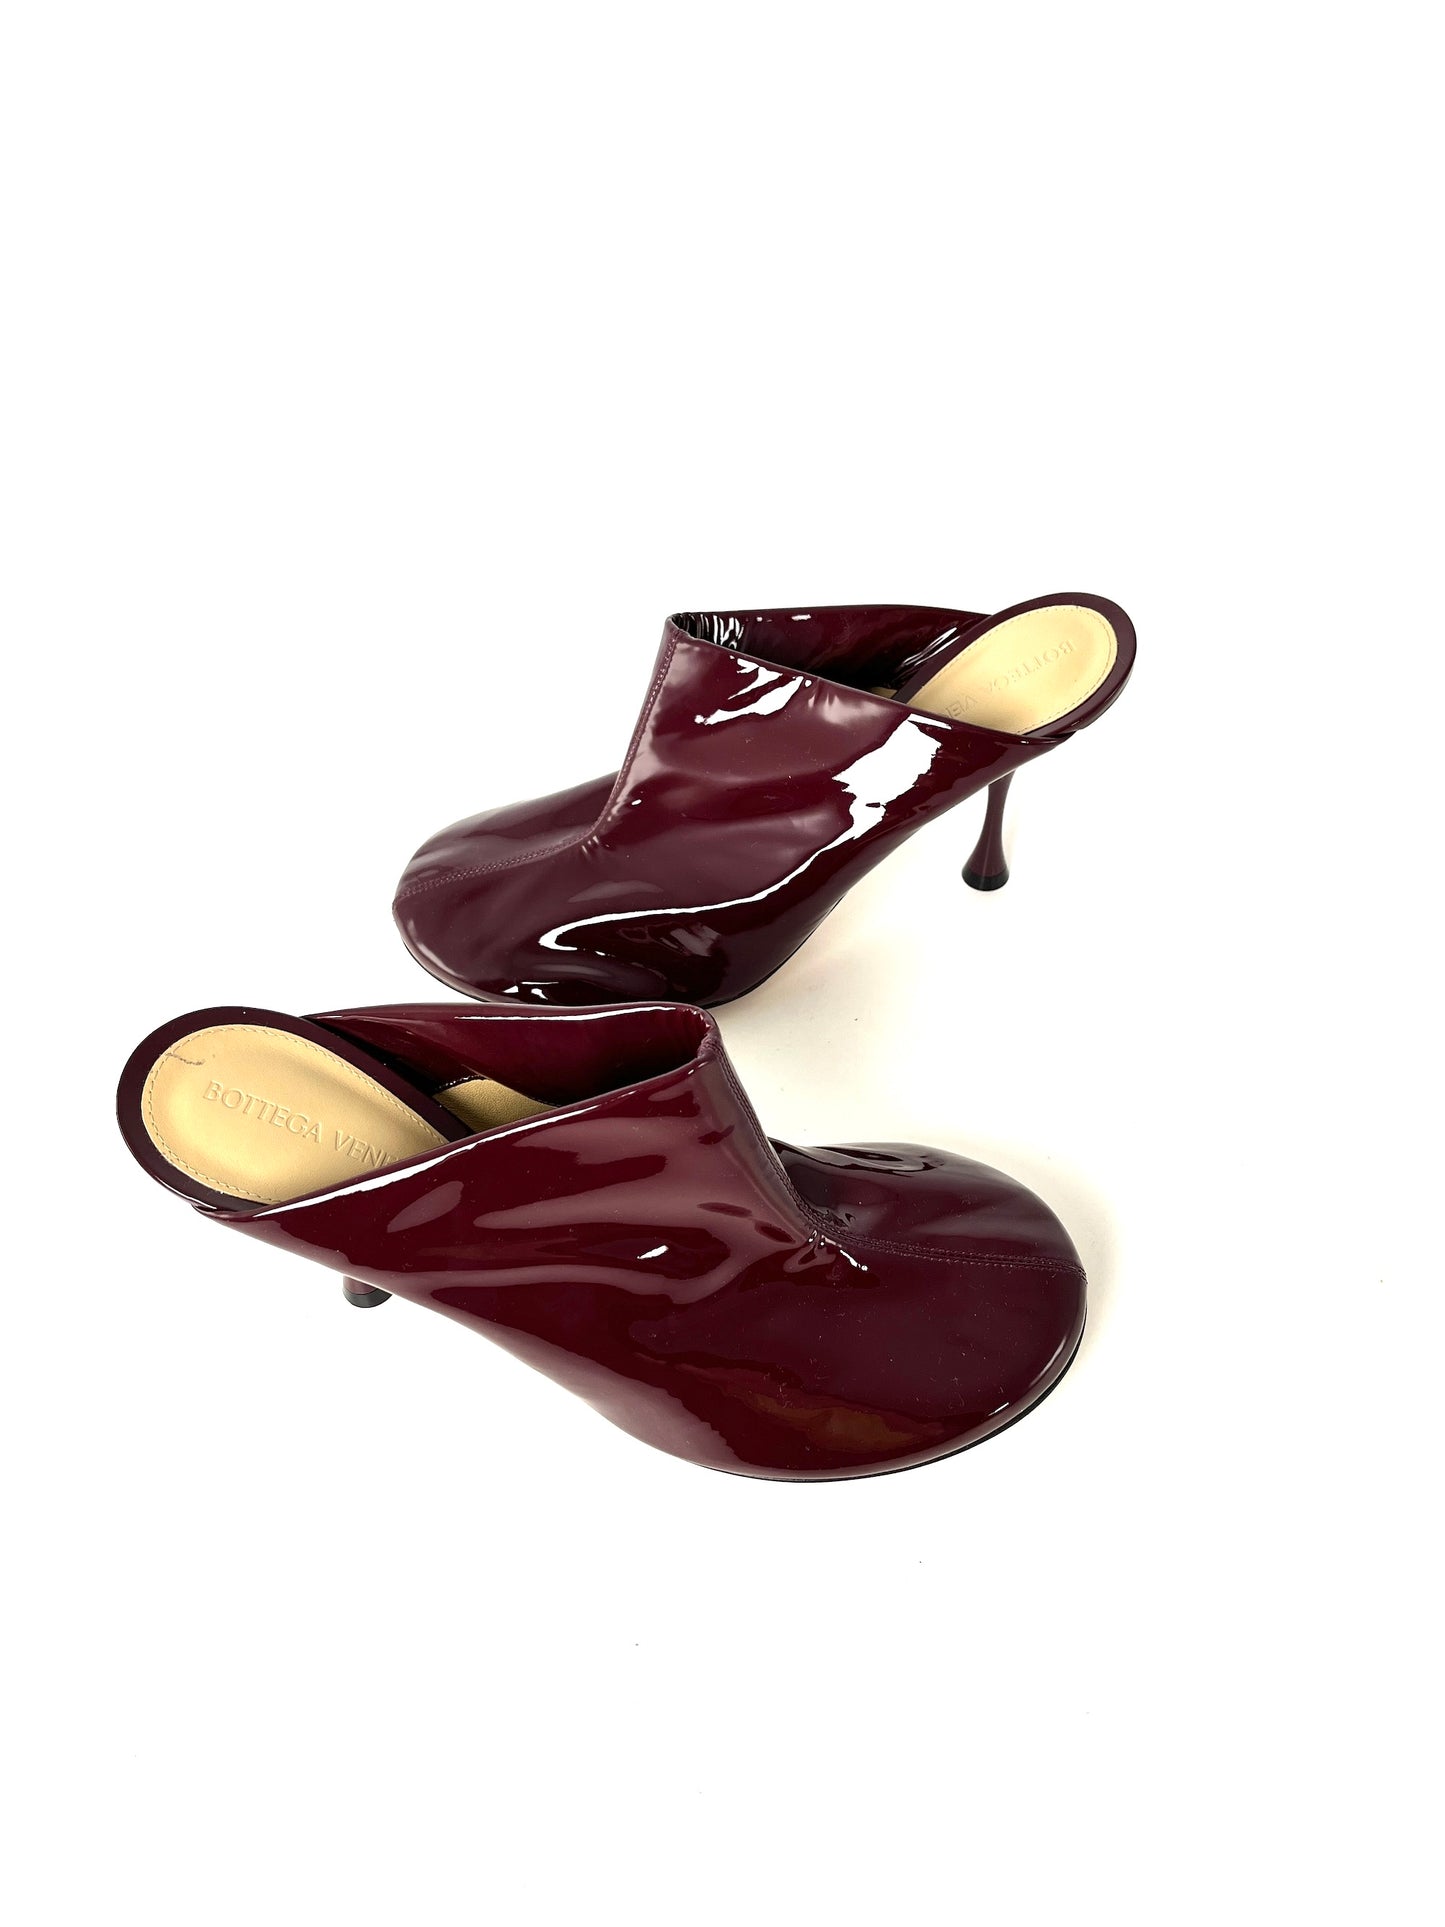 New Bottega Veneta Dot Sock Mules Slip on Round Toe Pumps Burgundy Patent Leather 40.5 9.5